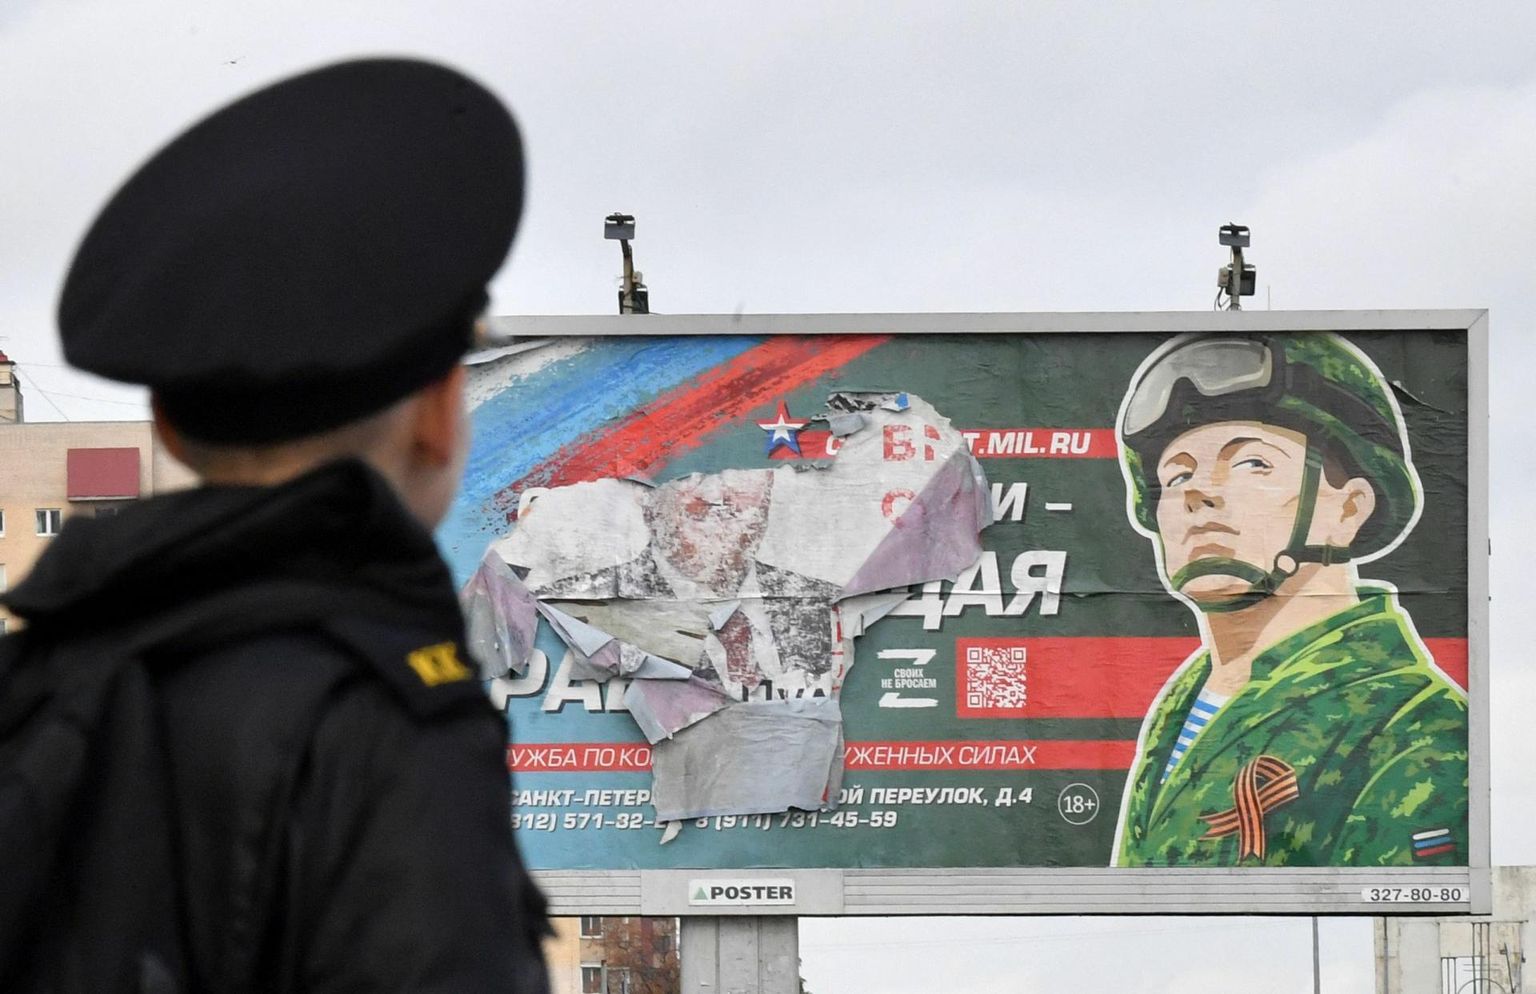 Vene sõjaväega ühinema kutsuv plakat Peterburis.